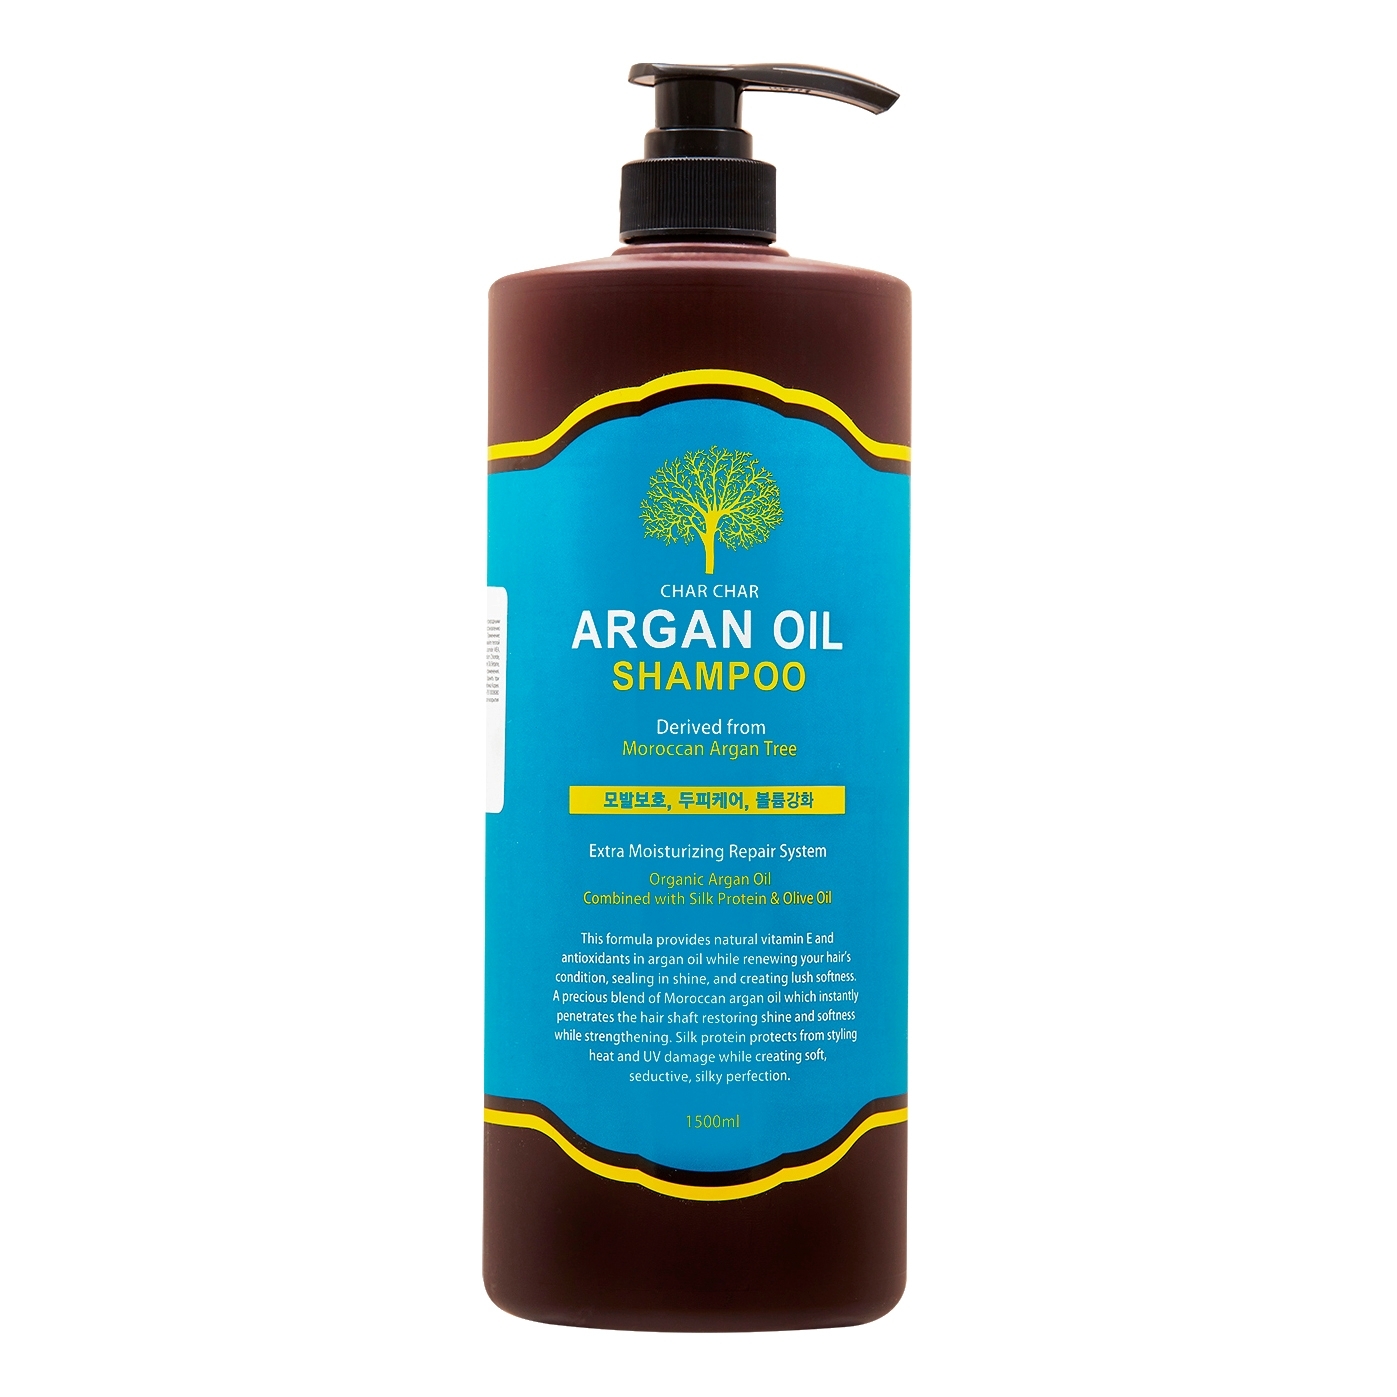 CHAR CHAR Argan Oil Shampoo Шампунь для волос АРГАНОВЫЙ, 1500мл